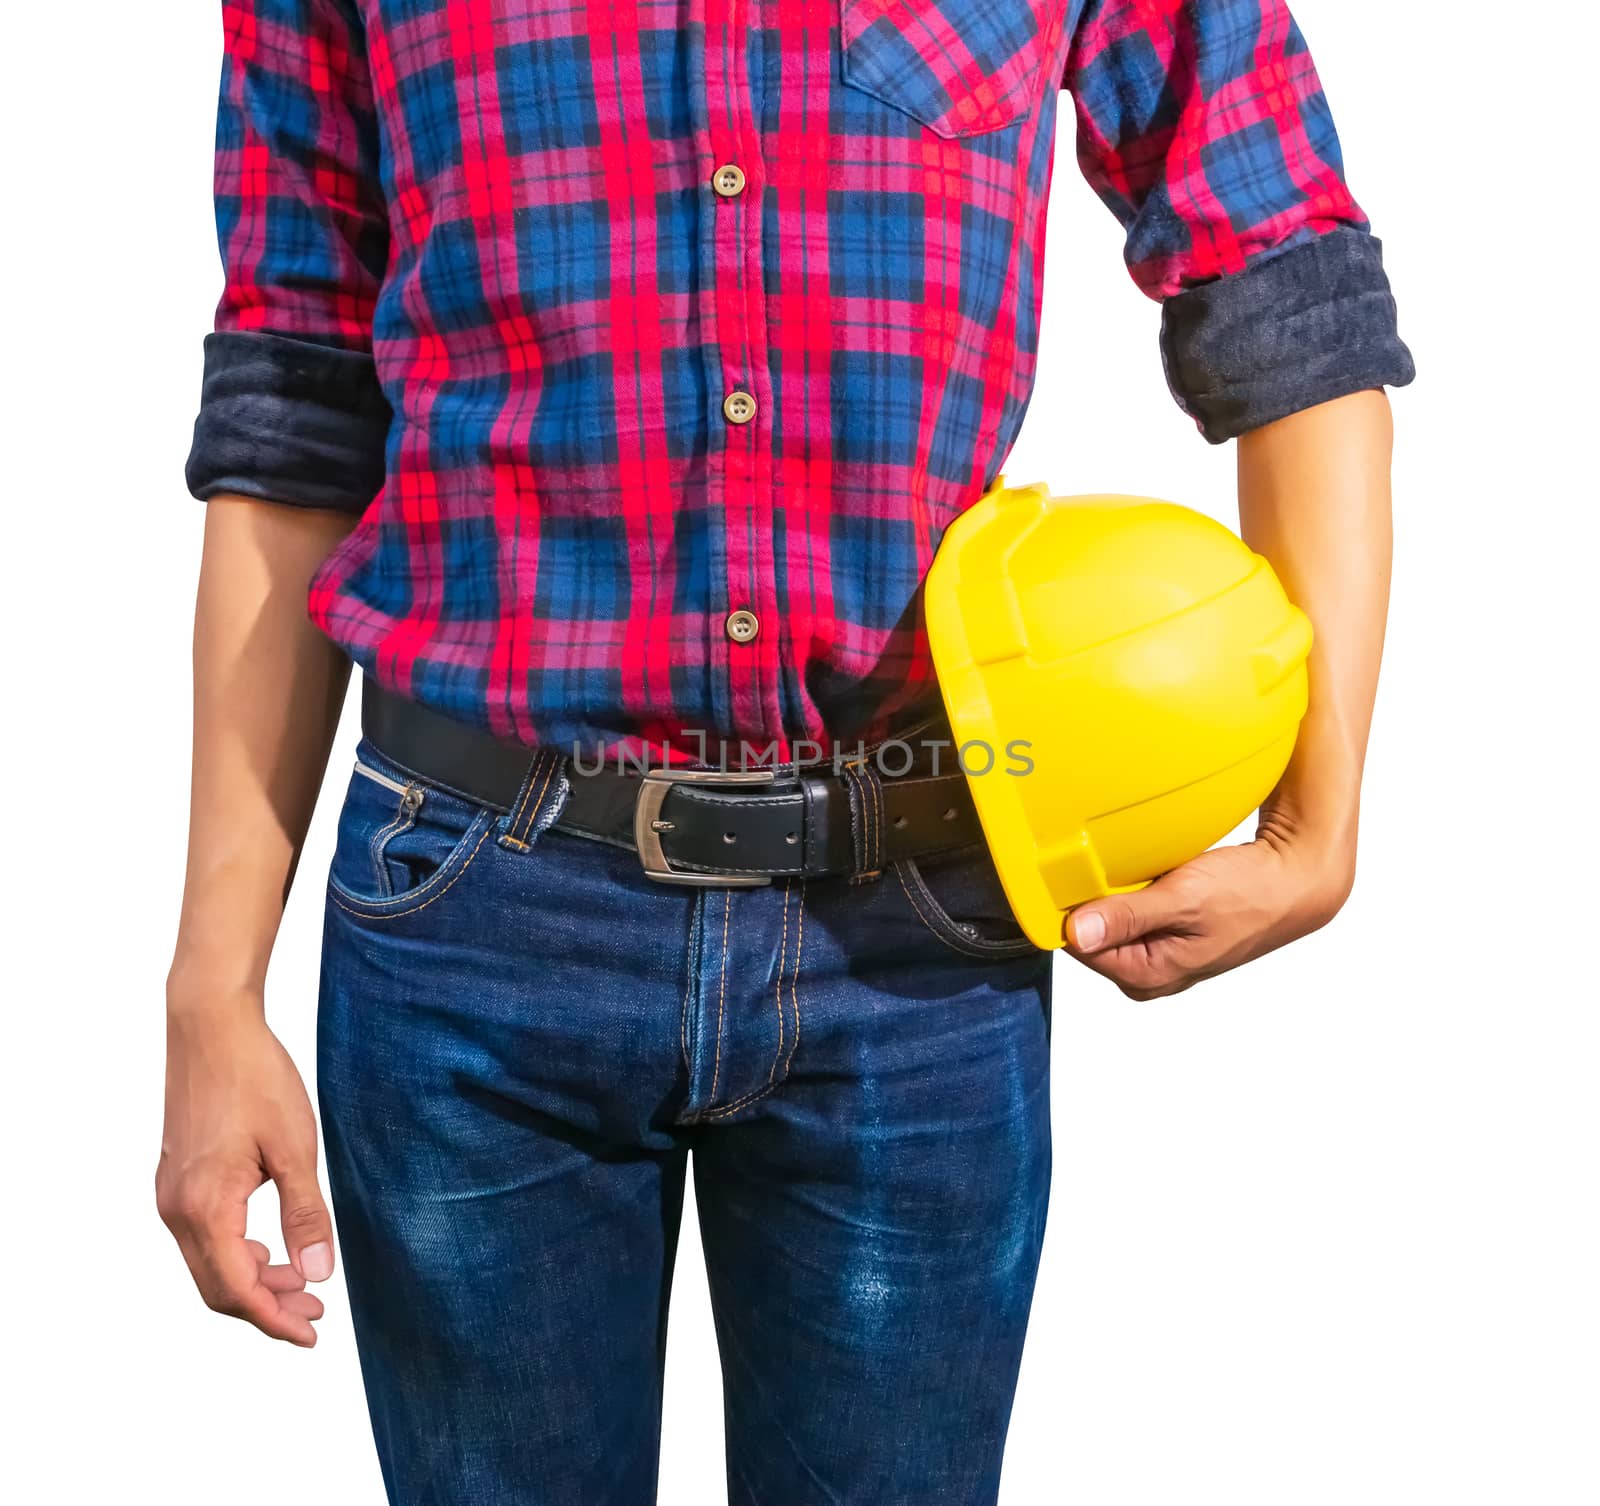 Engineer hold yellow safety helmet plastic construction by pramot